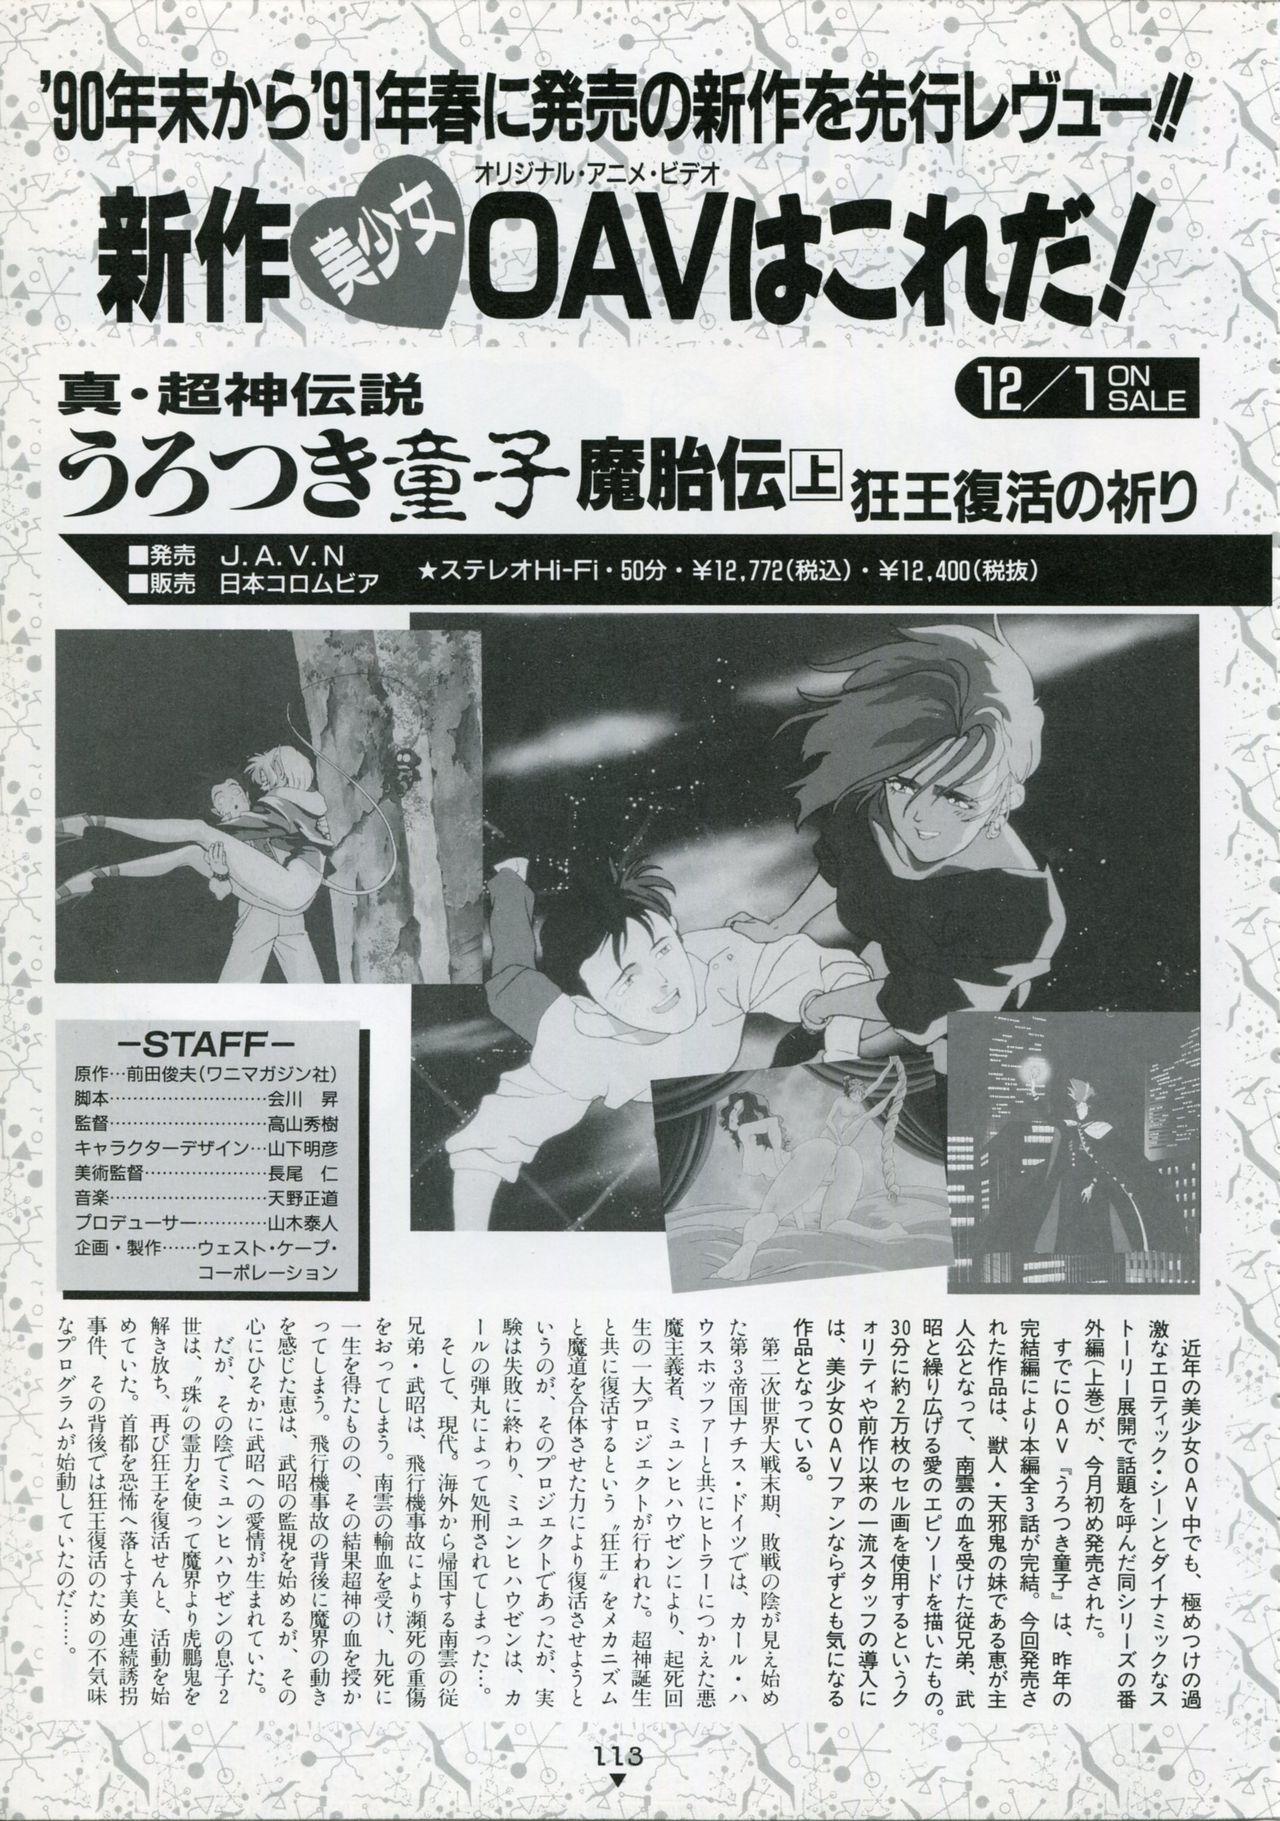 Bishoujo Anime Daizenshuu - Adult Animation Video Catalog 1991 108